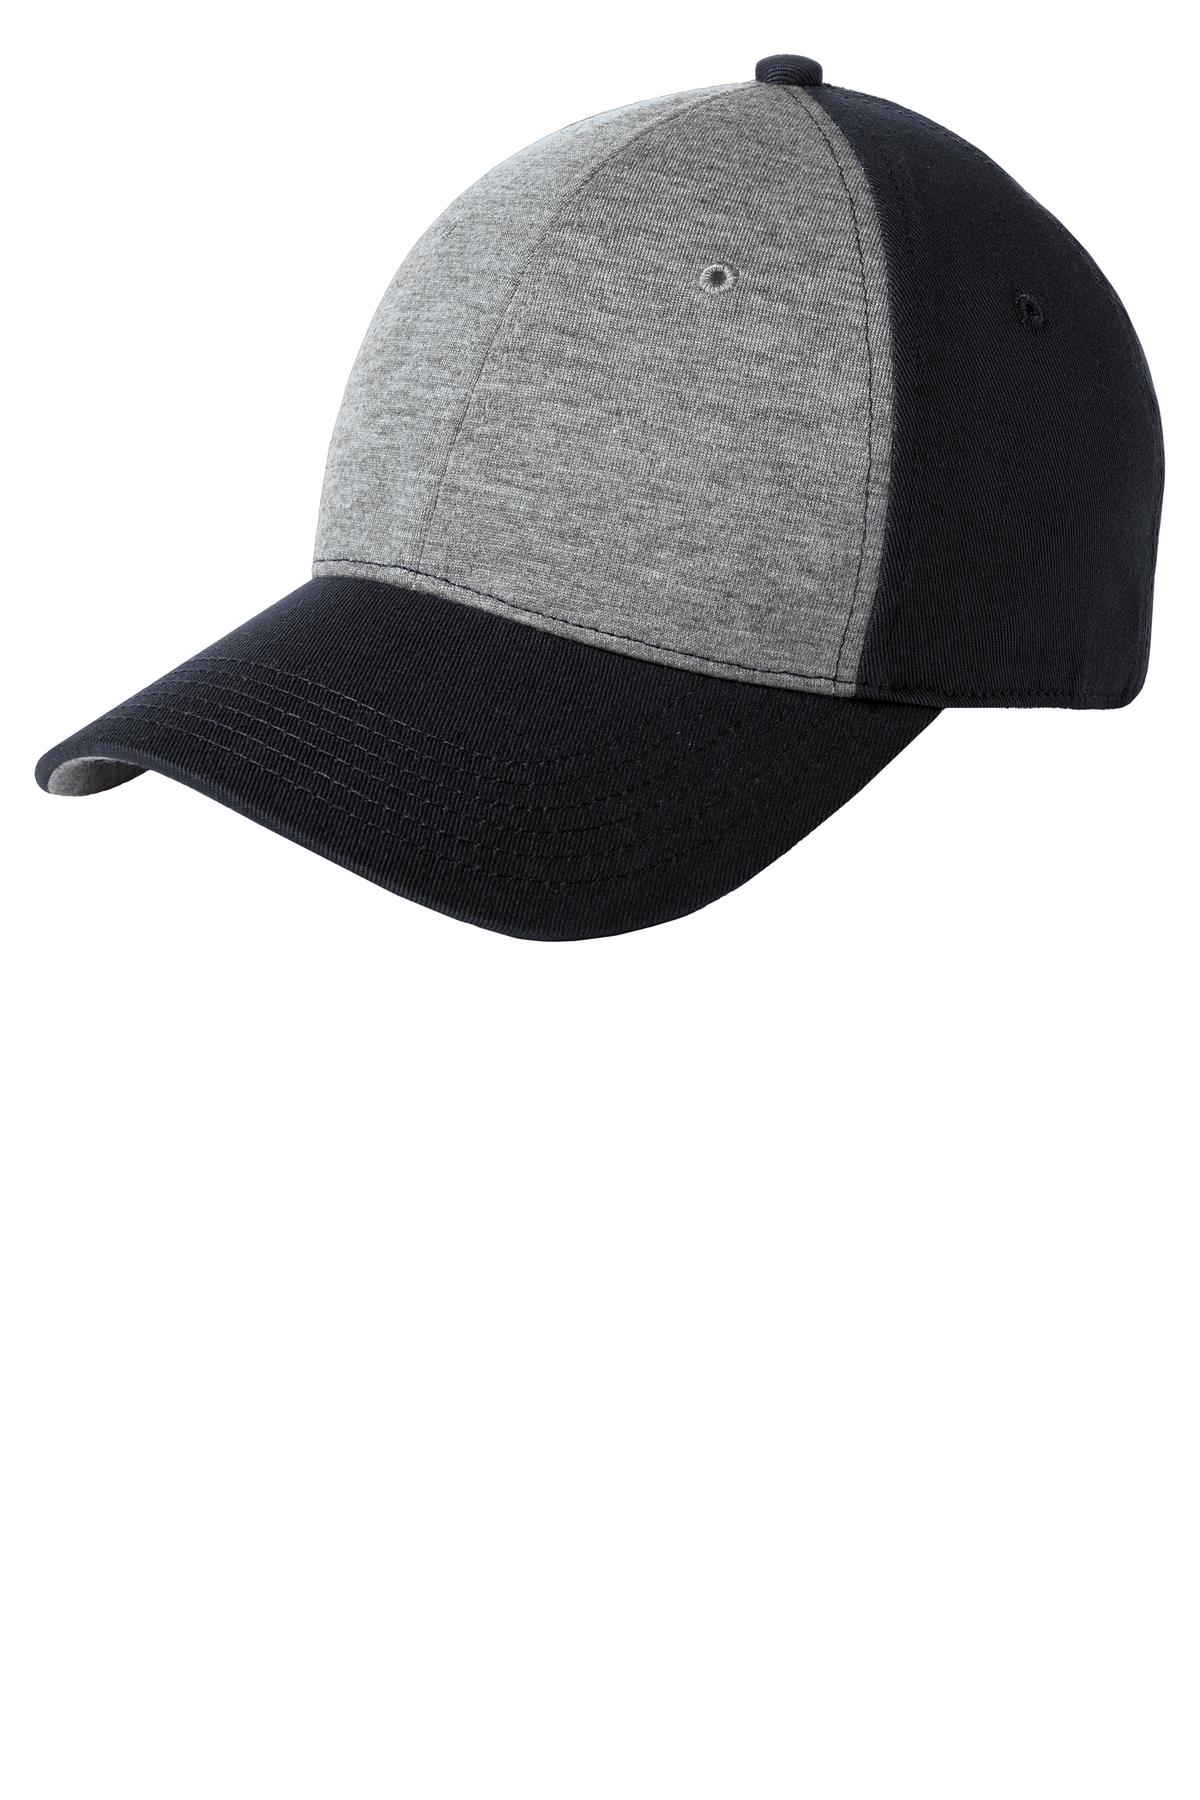 Sport-Tek Hospitality Caps ® Jersey Front Cap.-Sport-Tek